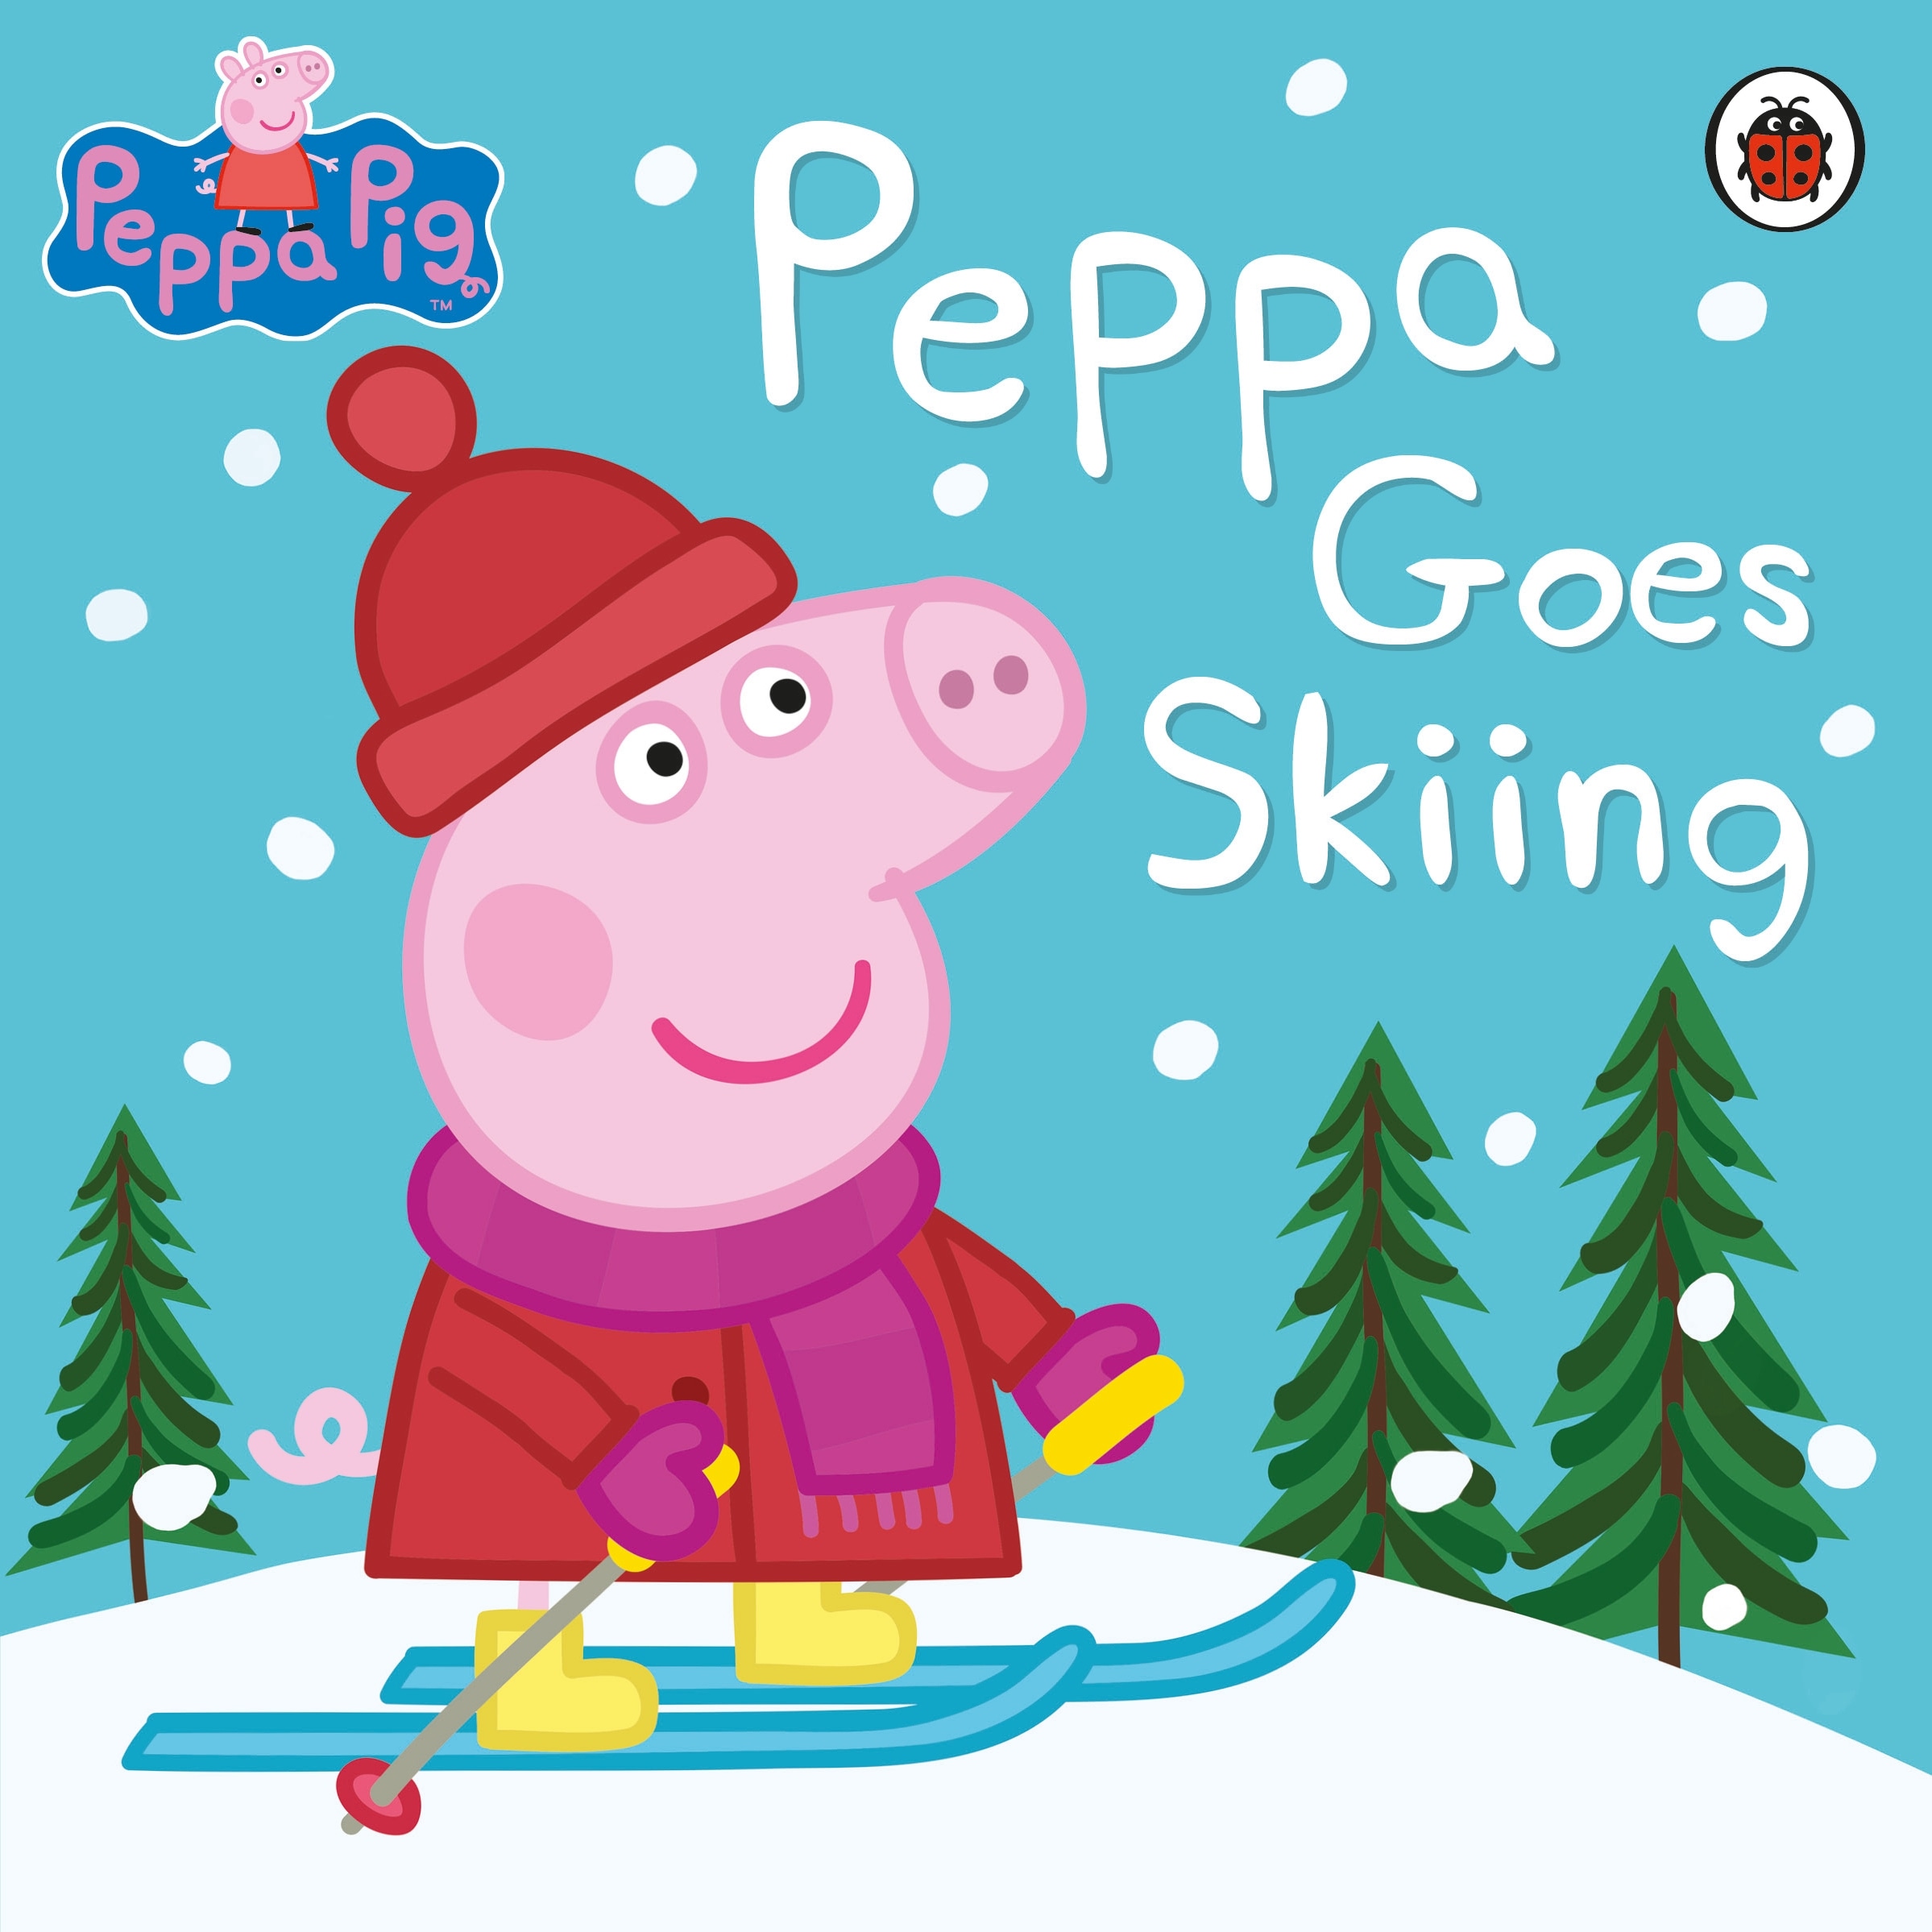 Book “Peppa Pig: Peppa Goes Skiing” by Peppa Pig — January 2, 2014